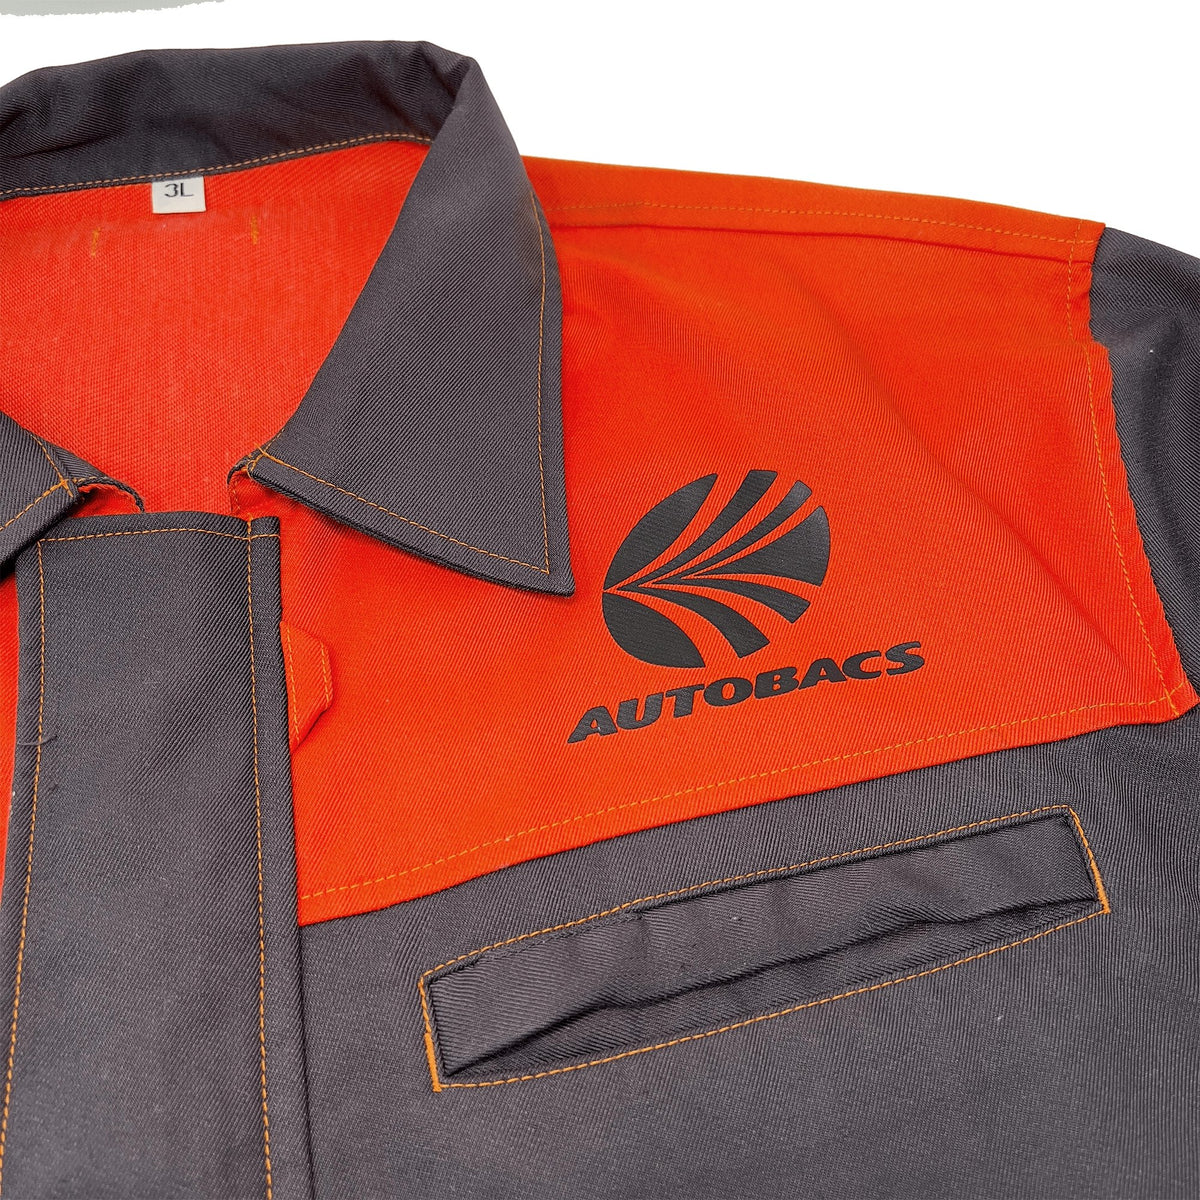 Genuine Retro Japan Super Autobacs Group Automotive Employee Uniform Jacket - Sugoi JDM